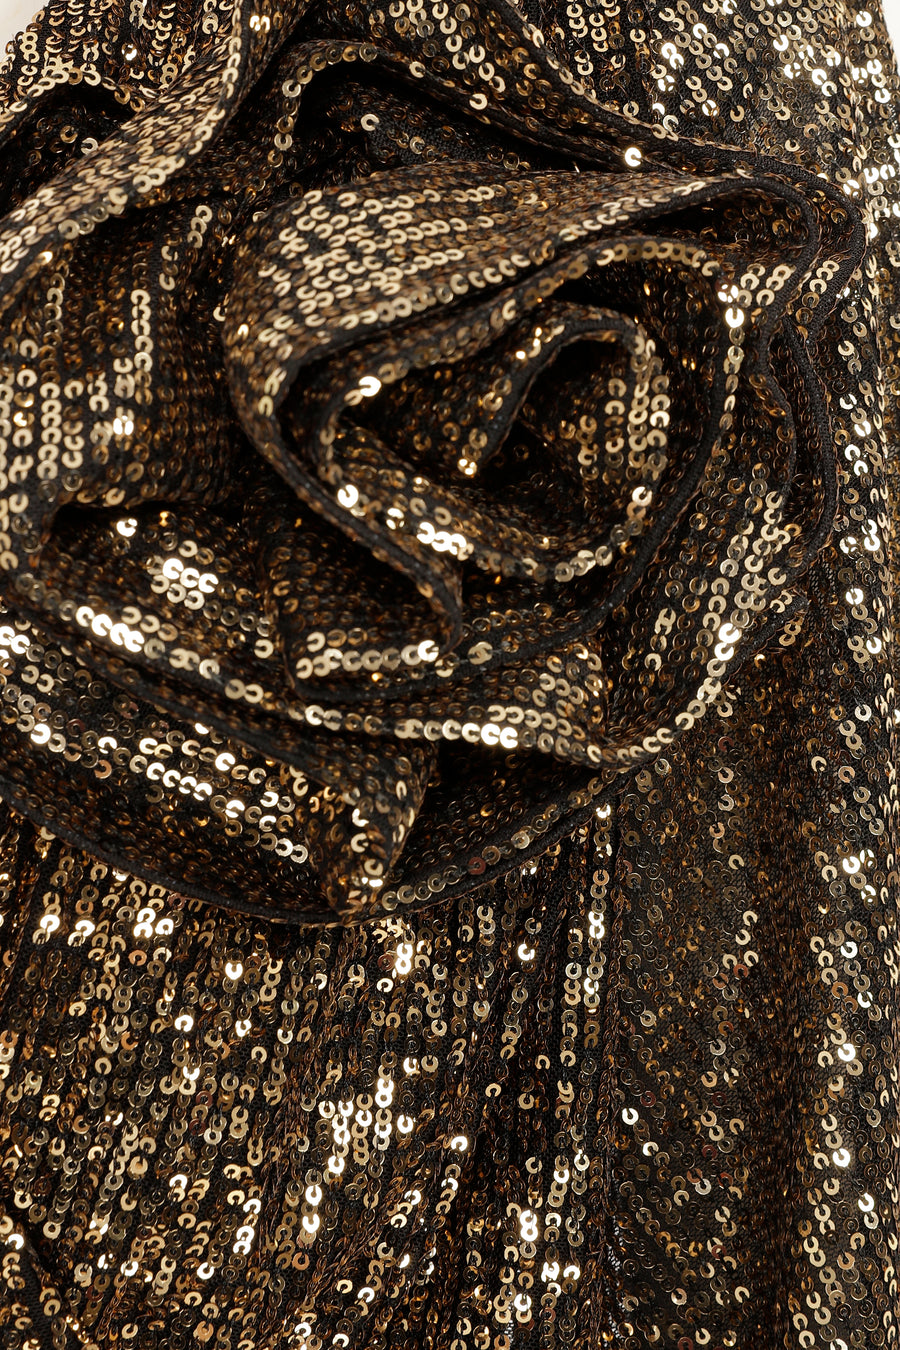 Soleil Gold Wrap-Over Sequin Dress